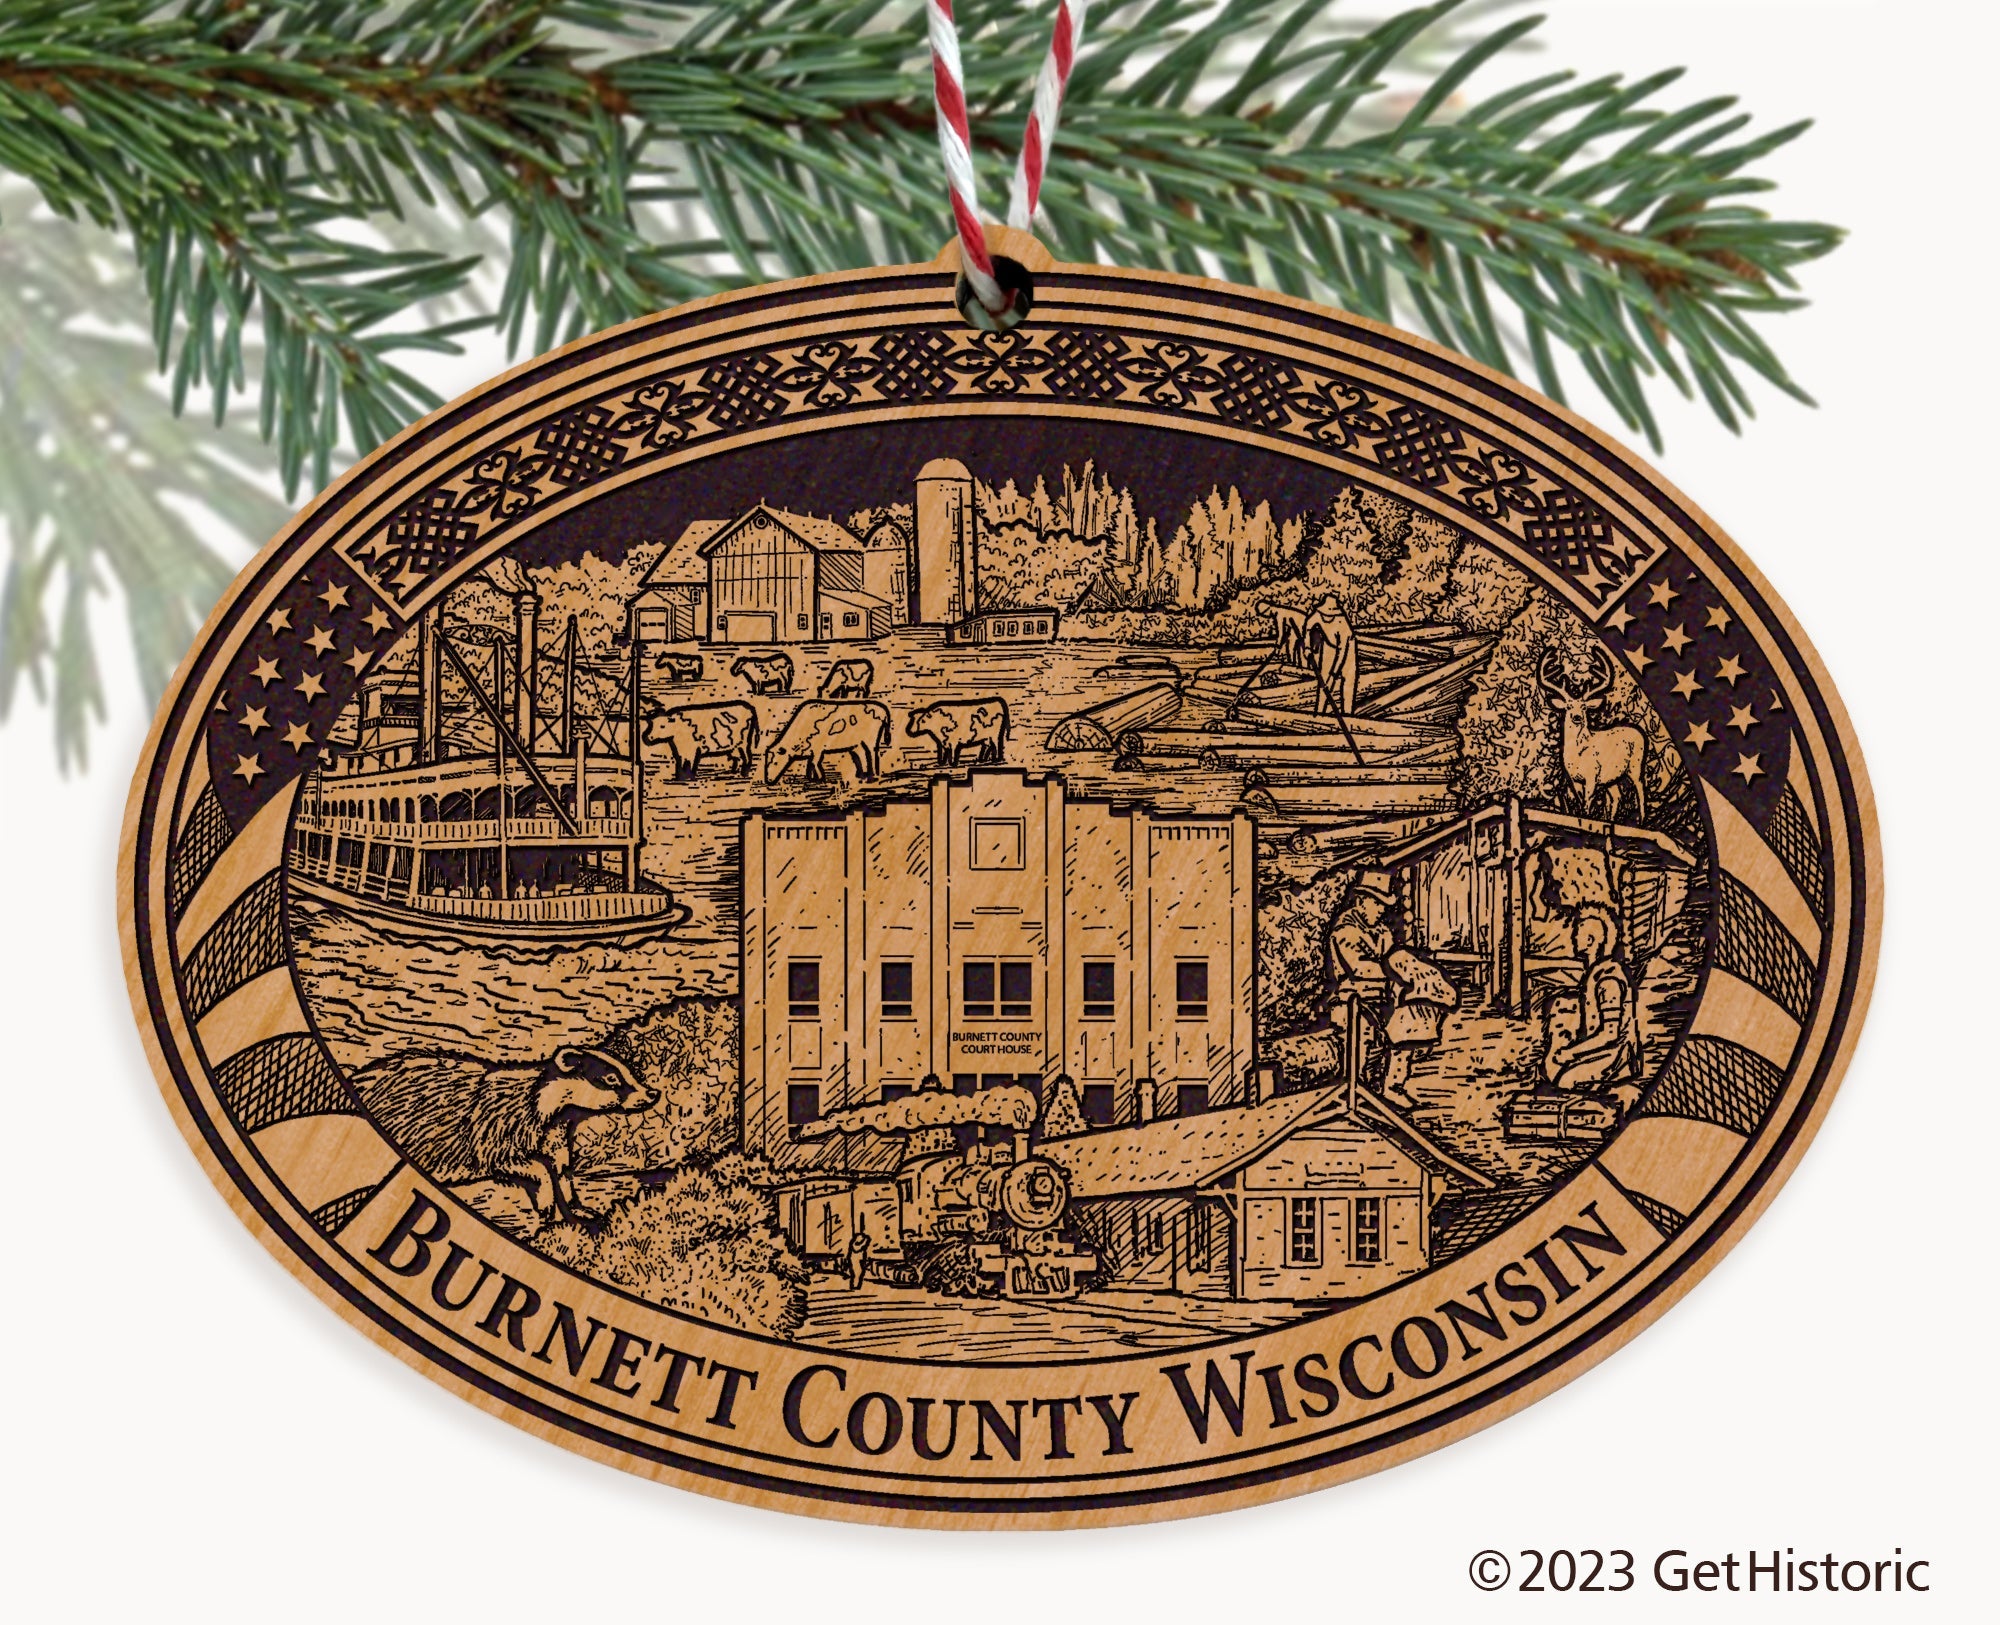 Burnett County Wisconsin Engraved Natural Ornament